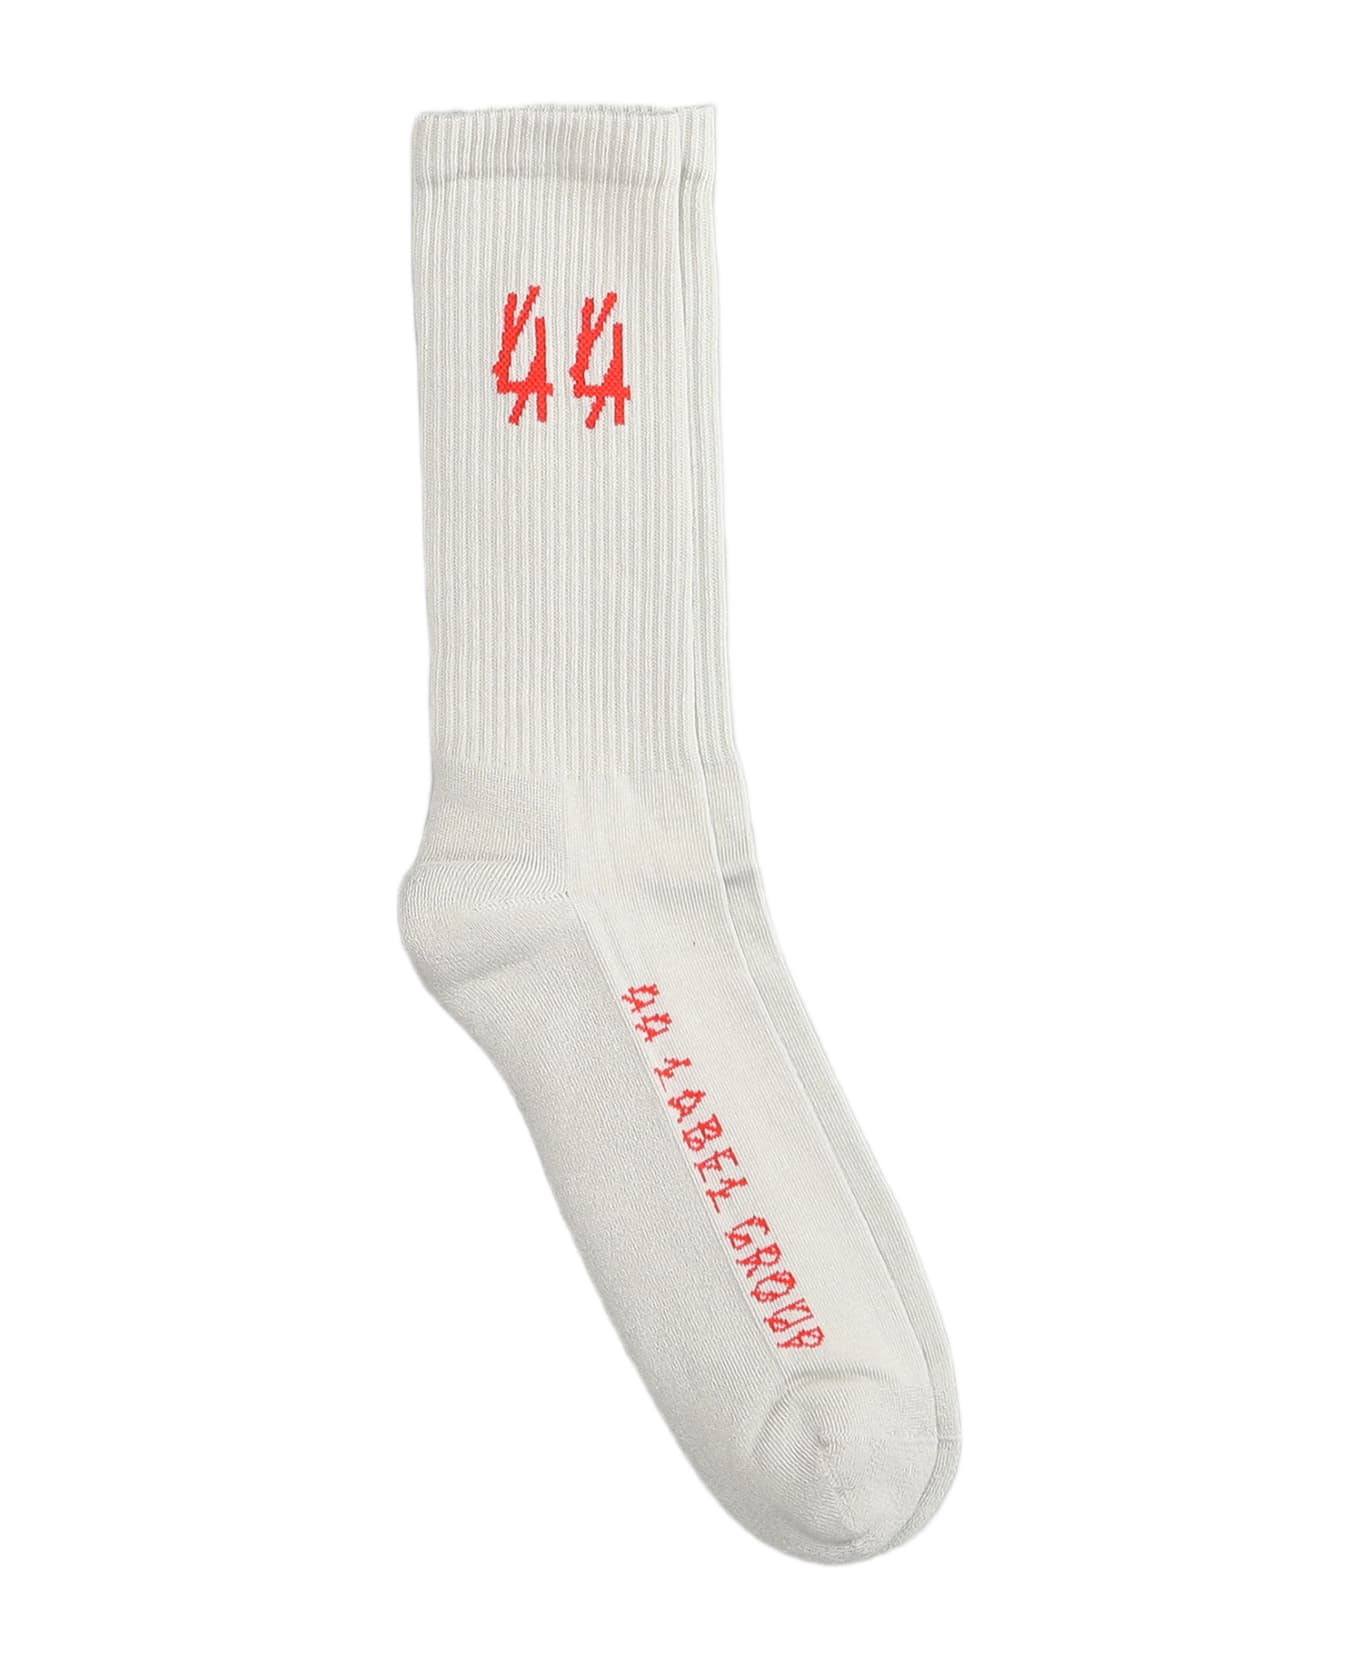 44 Label Group Socks In Grey Cotton - grey